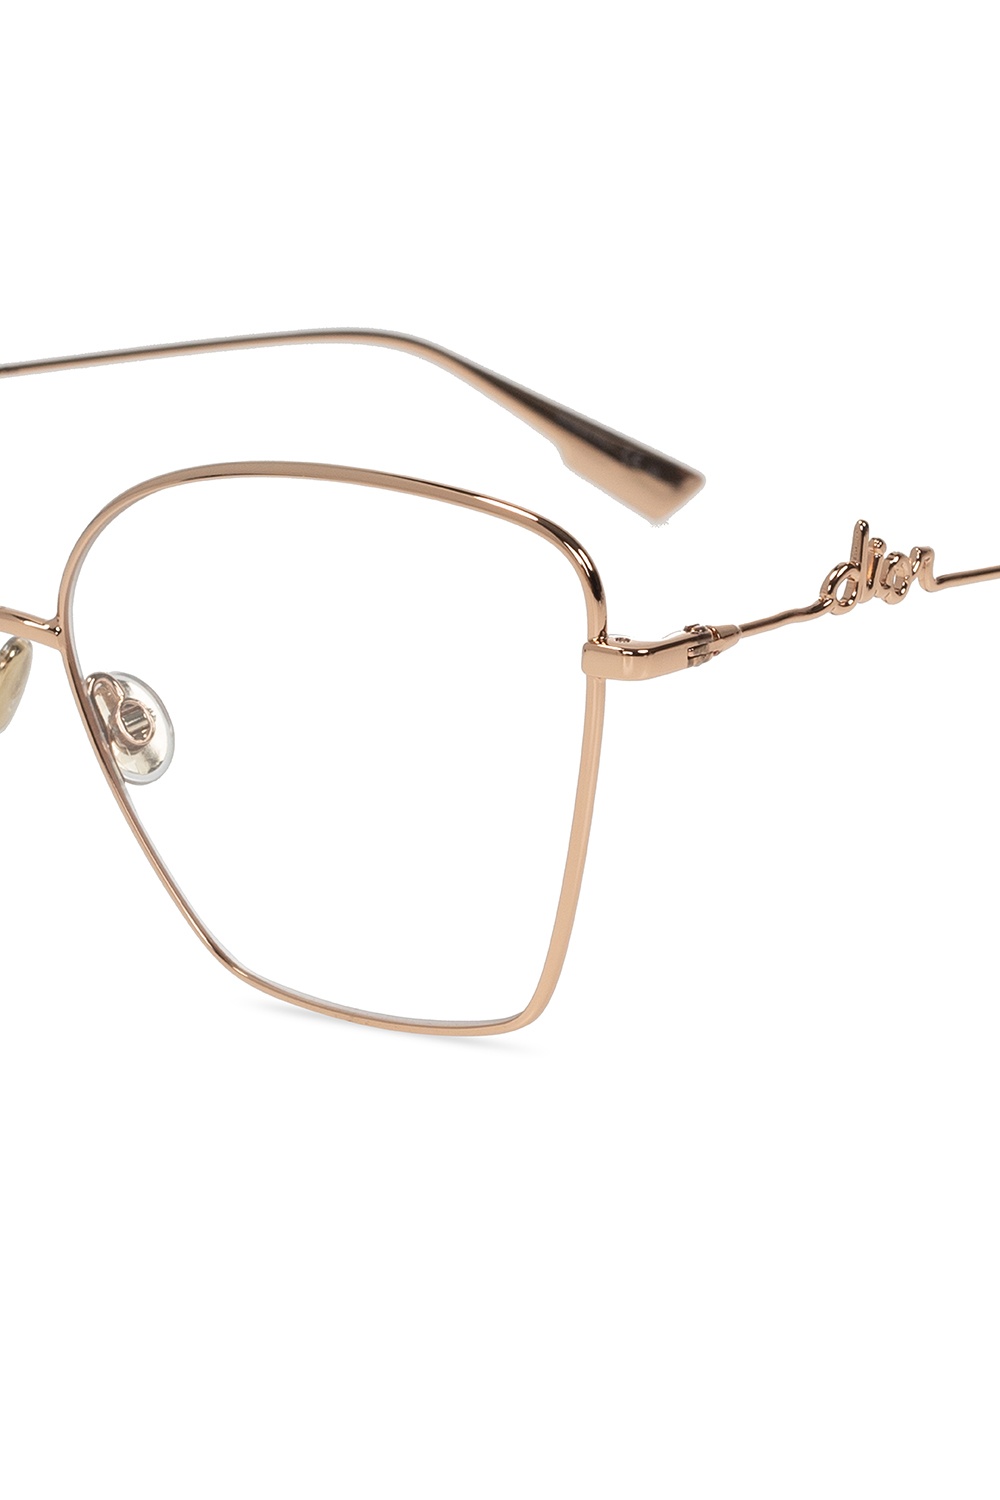 39 Best DIOR Eyeglasses ideas  dior eyeglasses dior eyeglasses